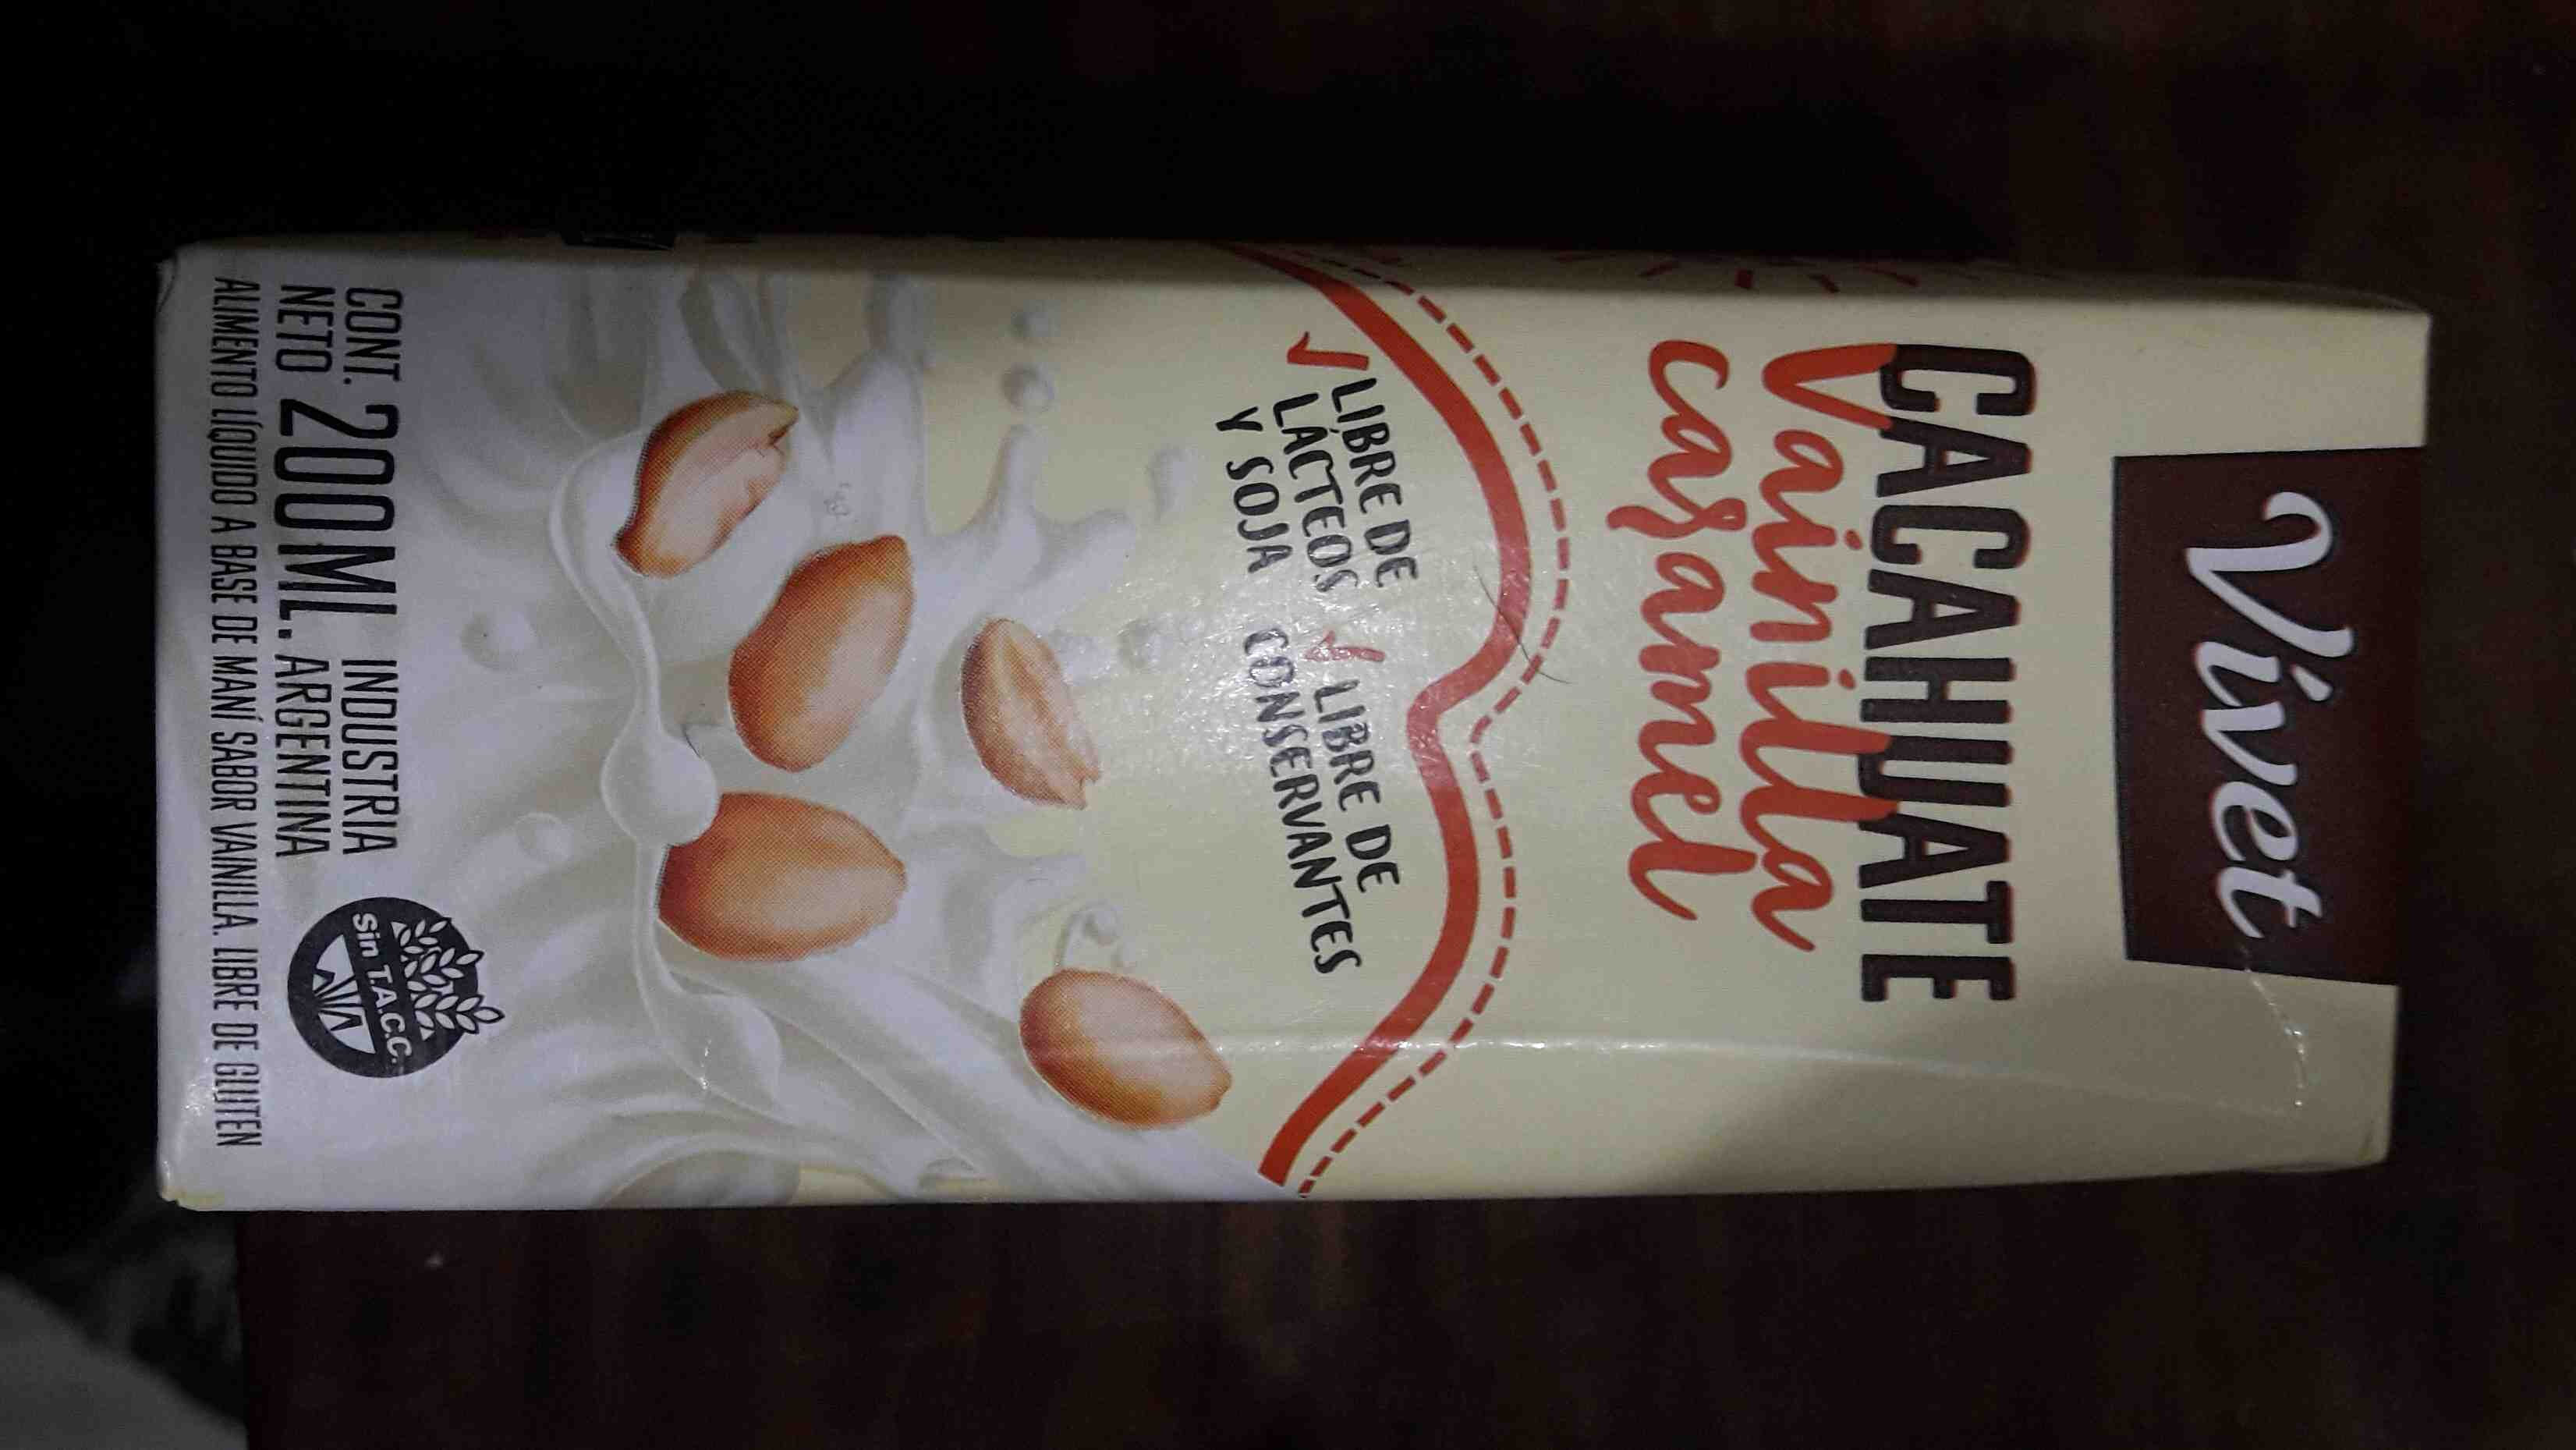 Cacahuate Vainilla Caramel Vivet - Product - en